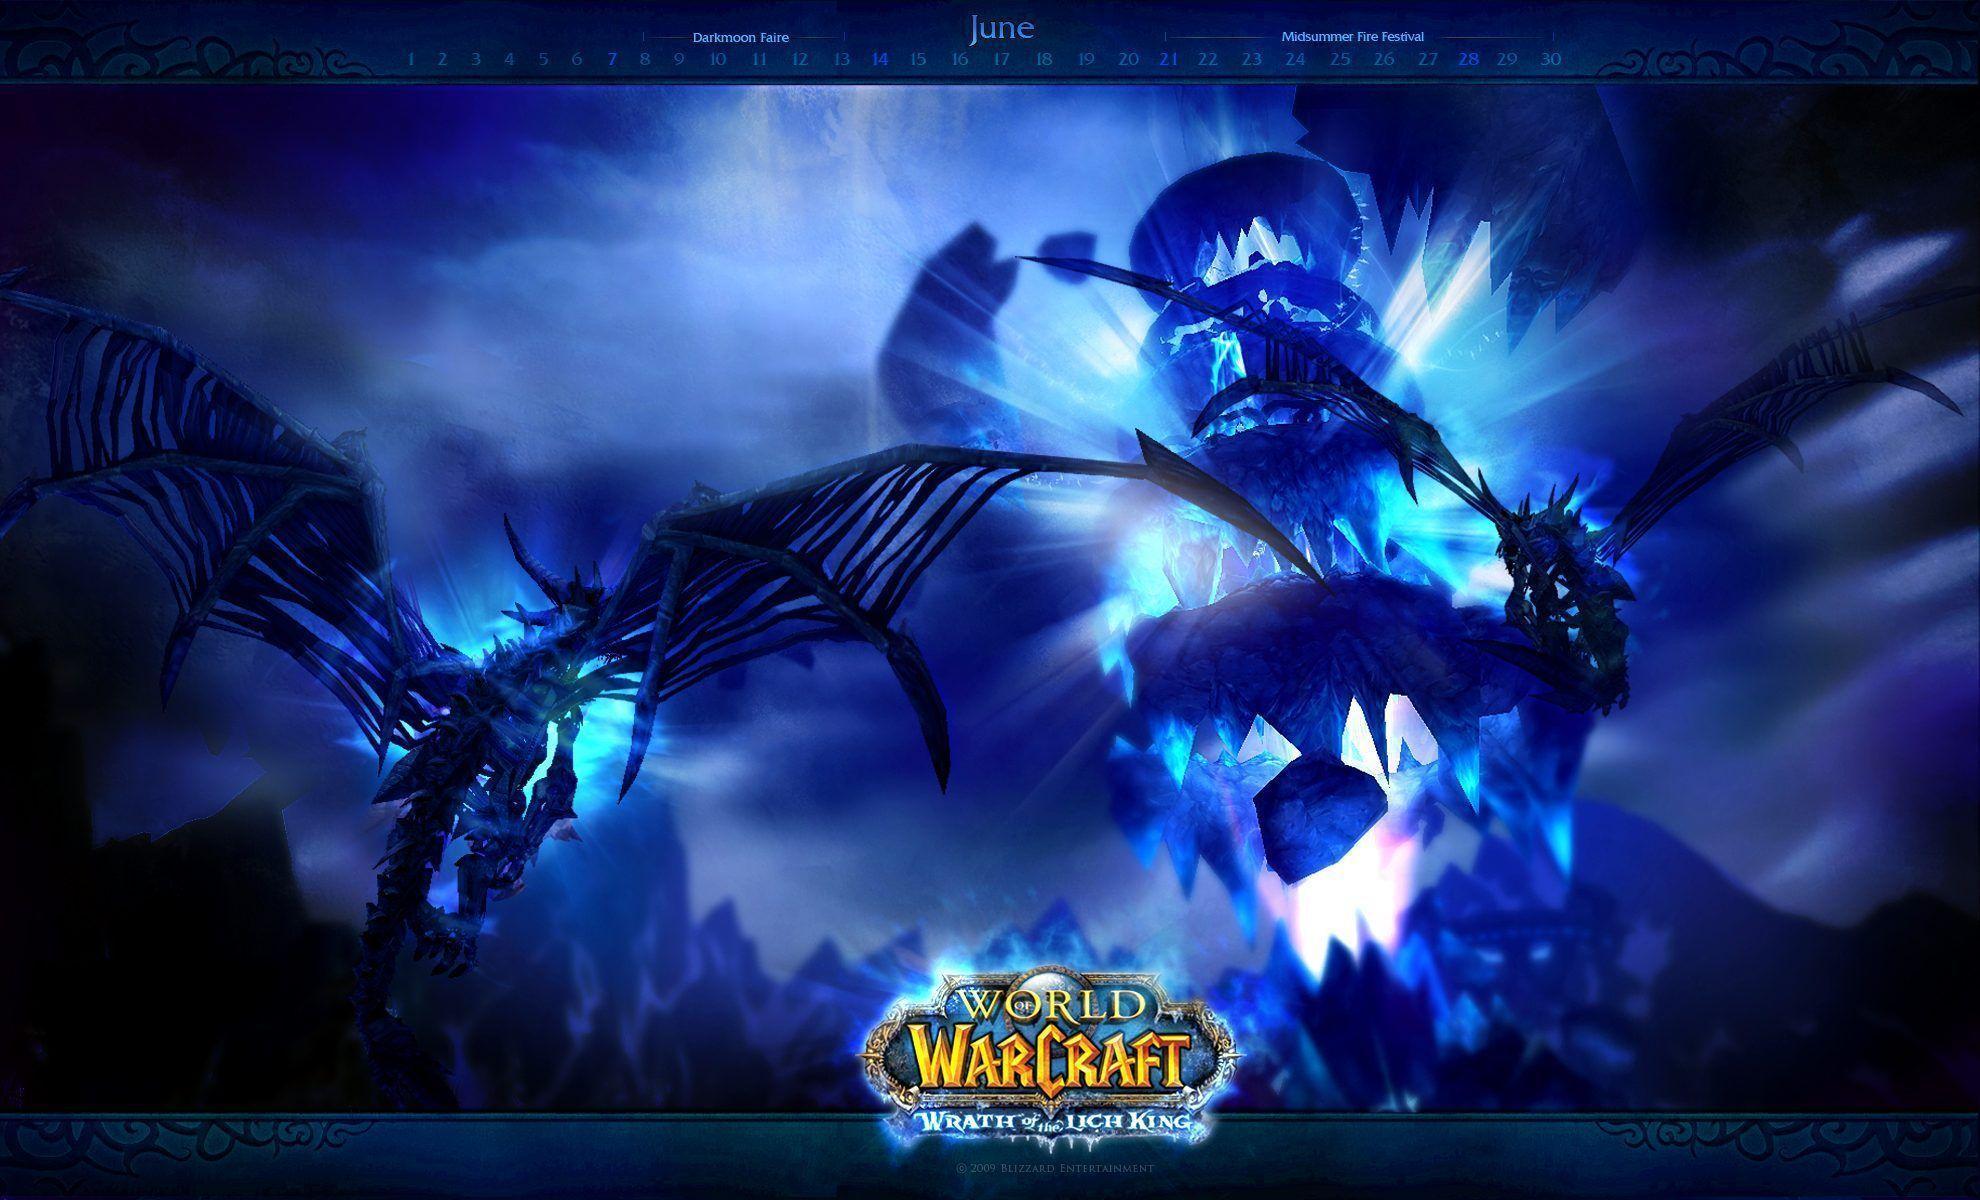 World of Warcraft wallpaper. World of Warcraft background